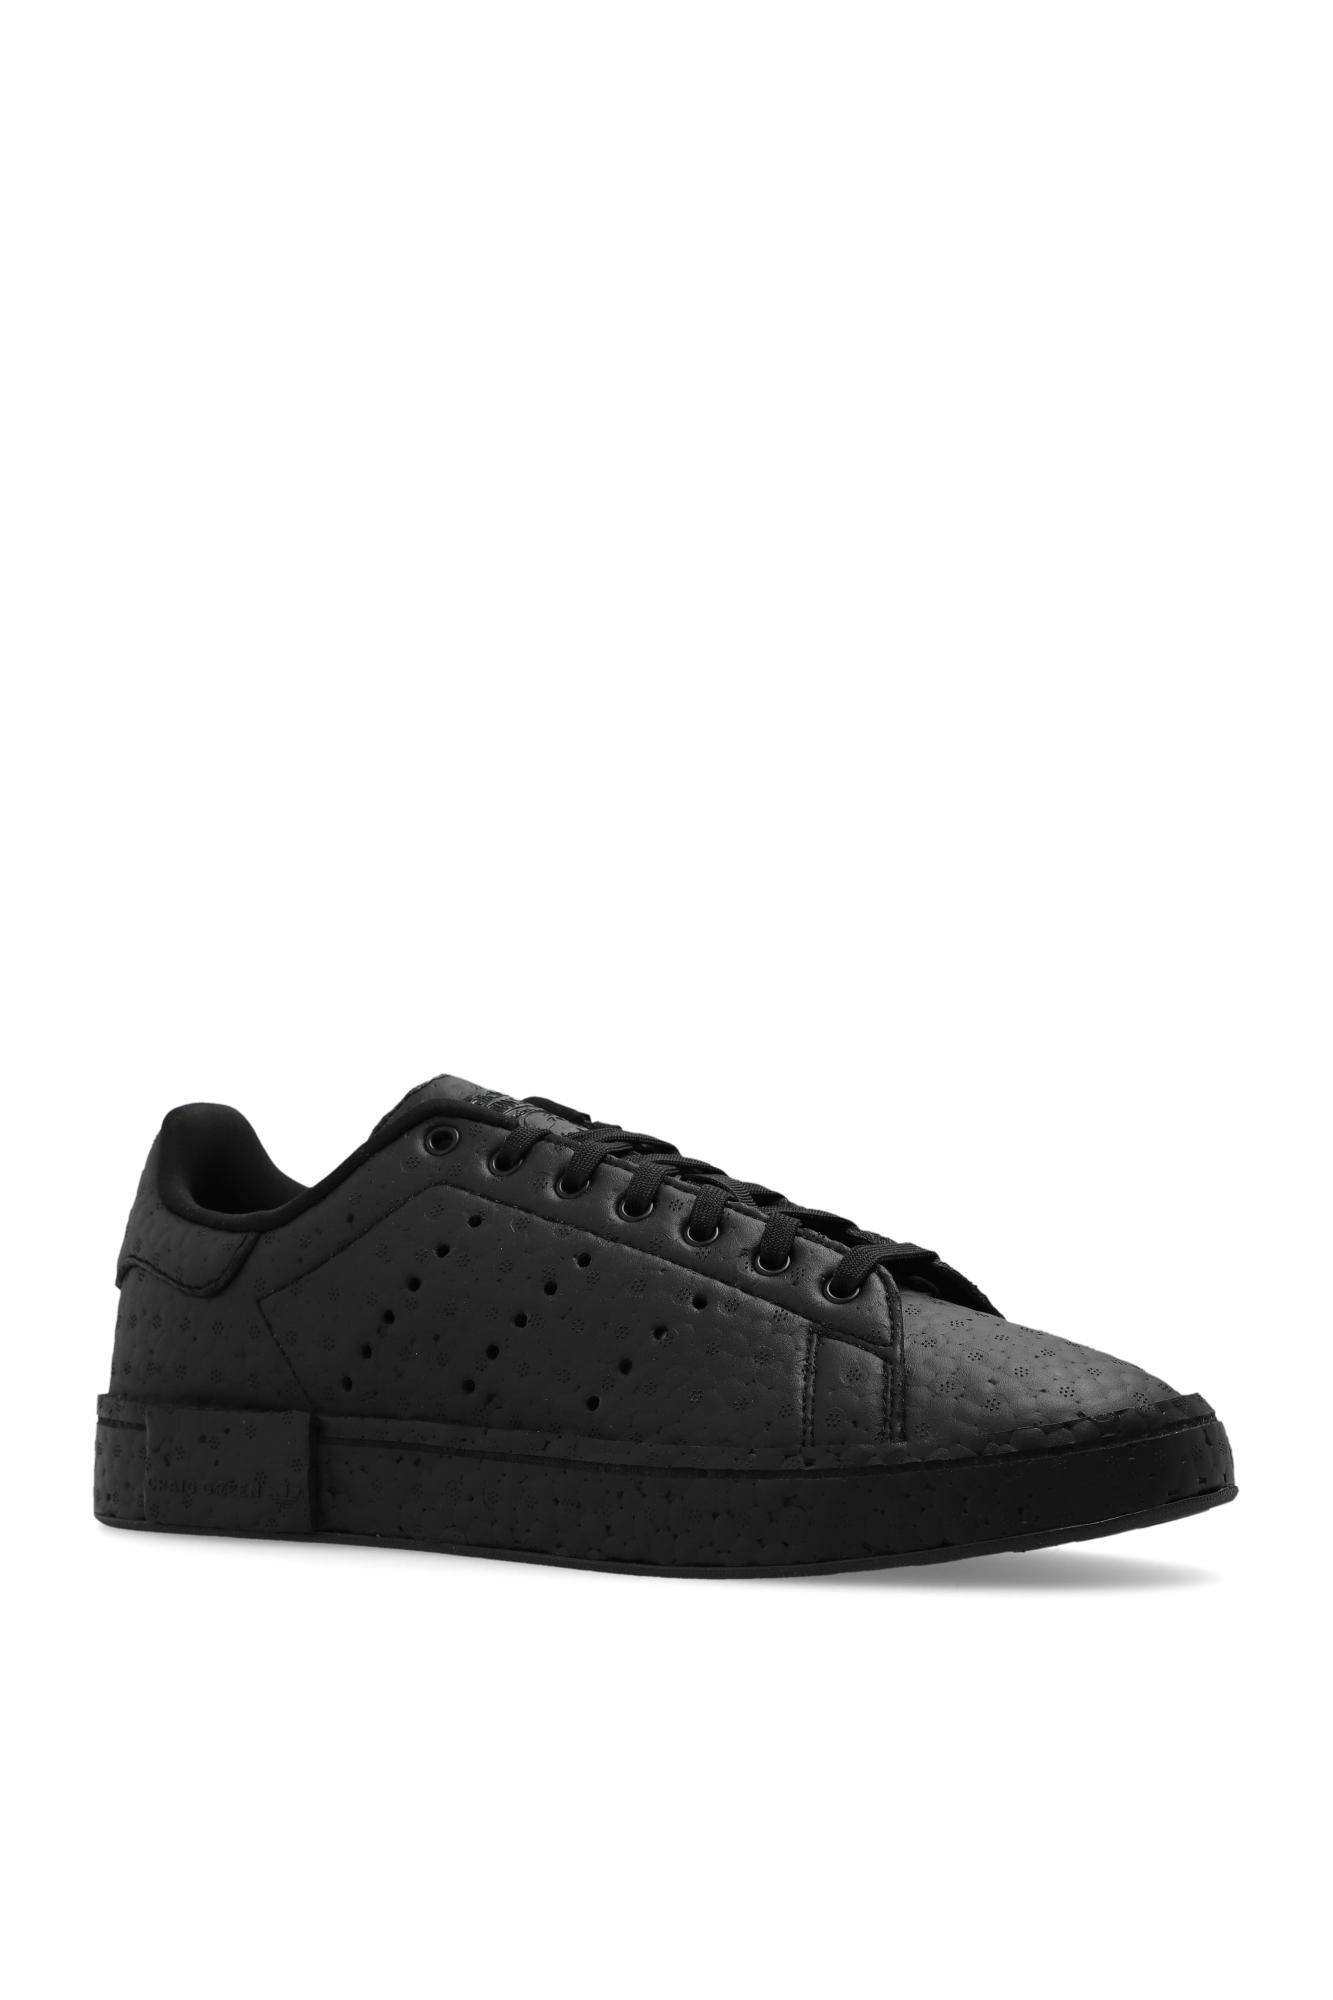 adidas Originals 'craig Green Stan Smith Boost' Sneakers in Black | Lyst